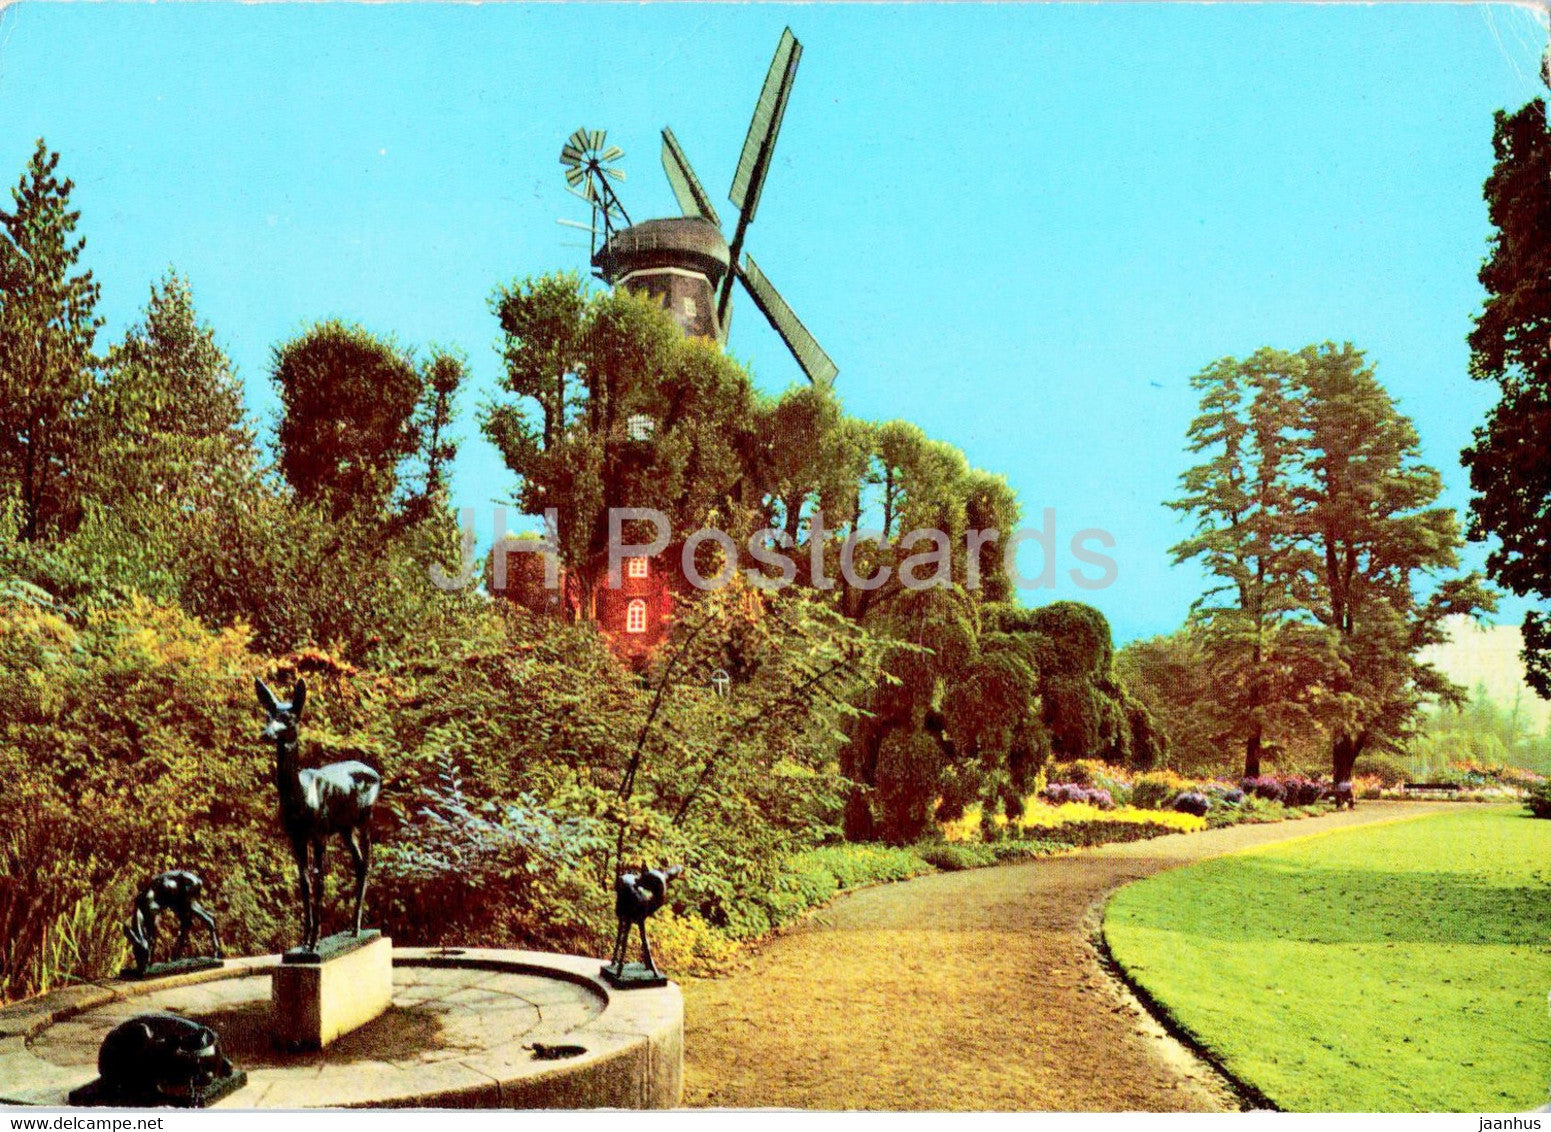 Bremen - Muhle am Wall Rehbrunnen - windmill - Germany - used - JH Postcards